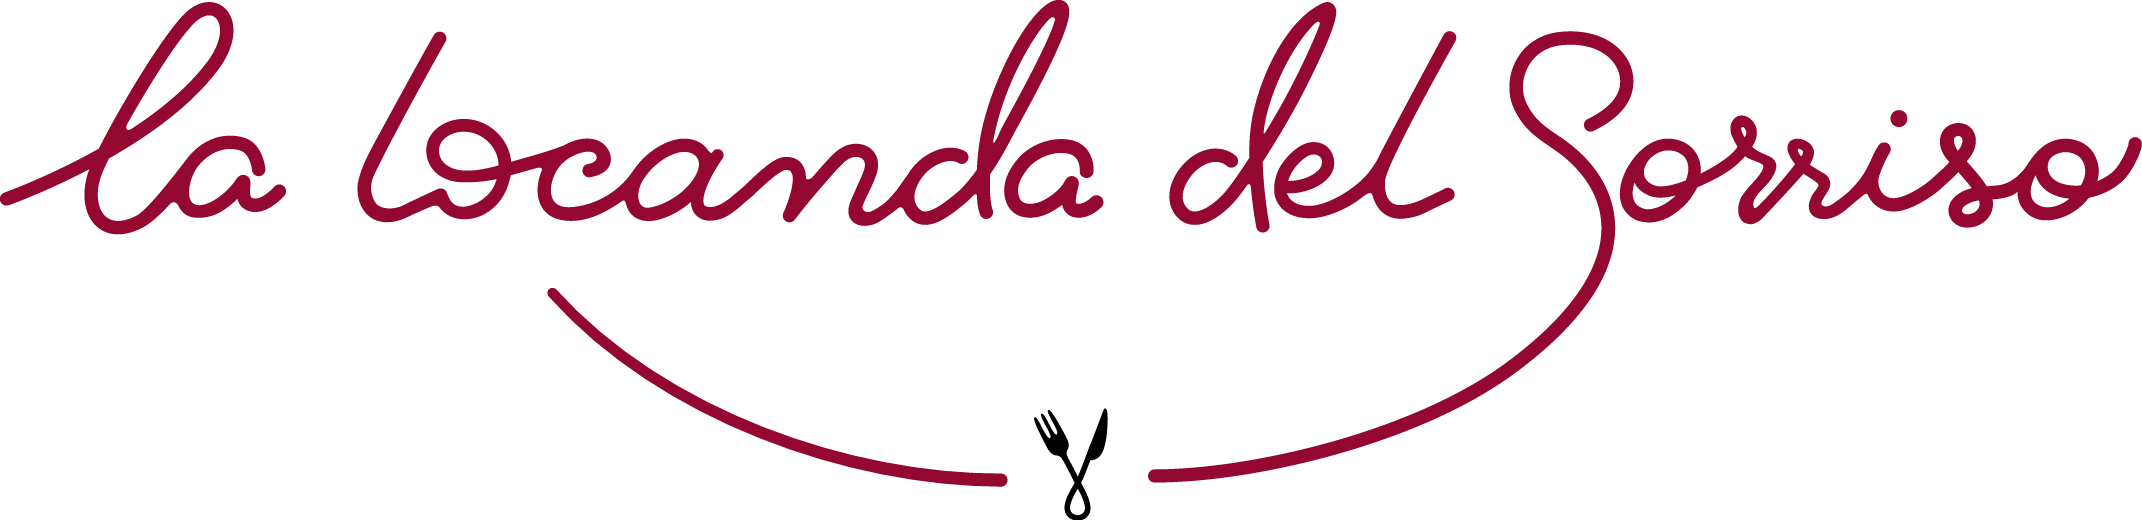 LaLocandaDelSorriso_logo